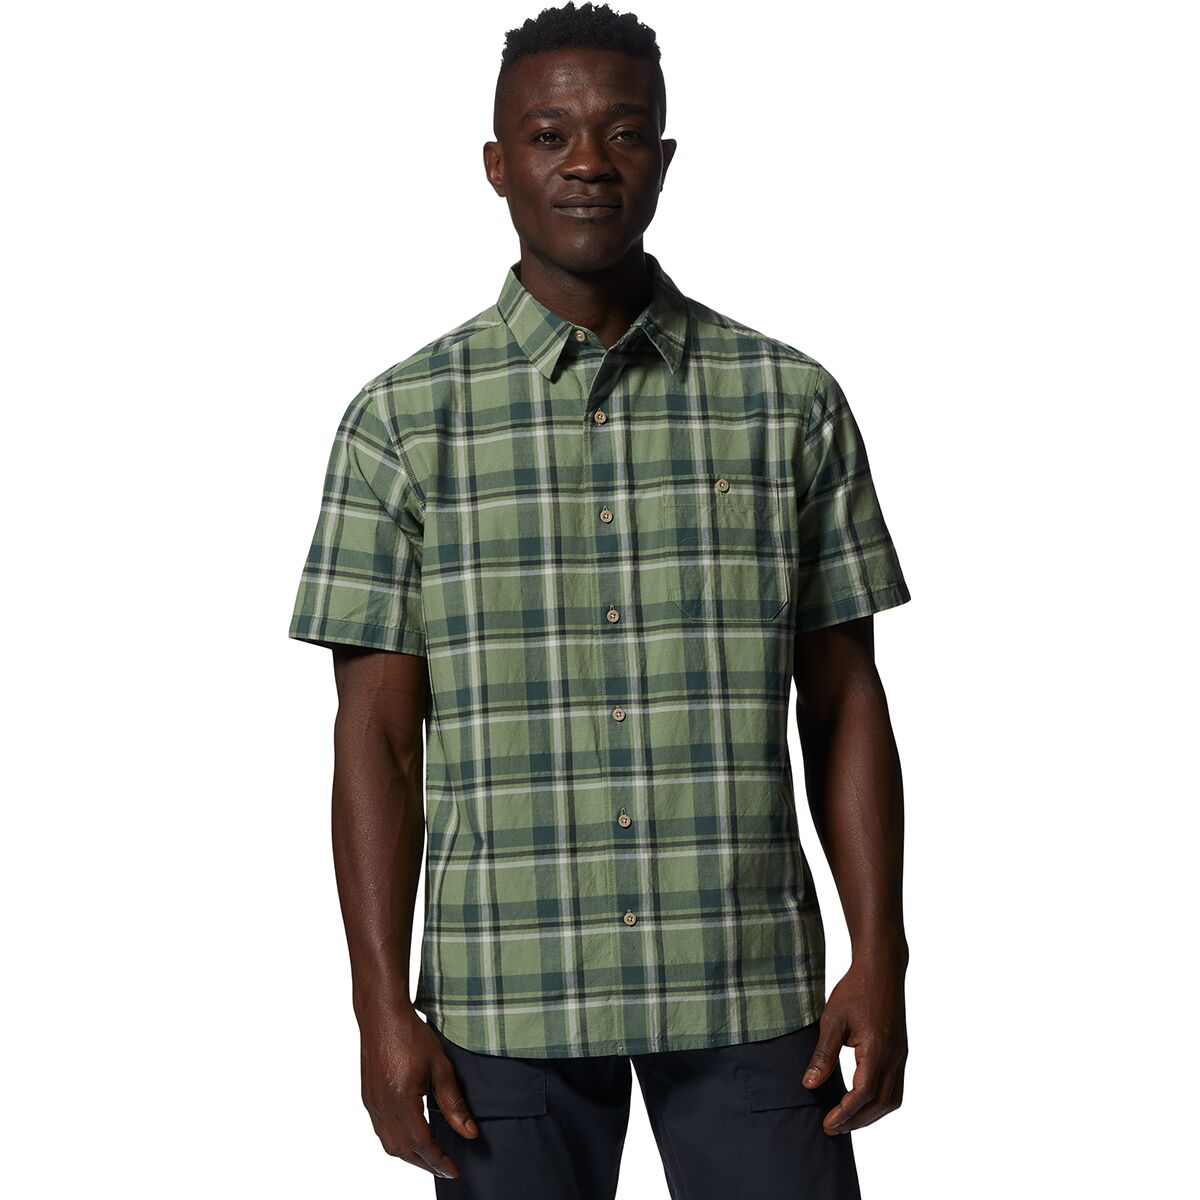 Big Cottonwood Short-Sleeve Shirt - Men